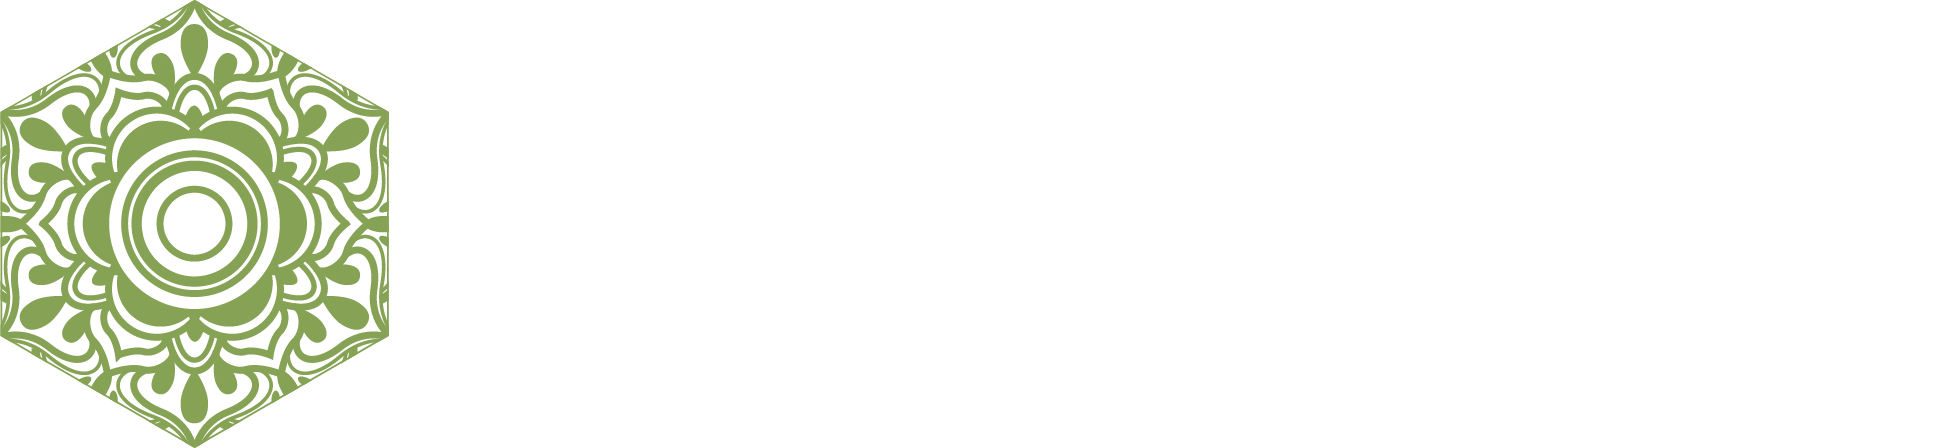 Shepherd Wealth Partners